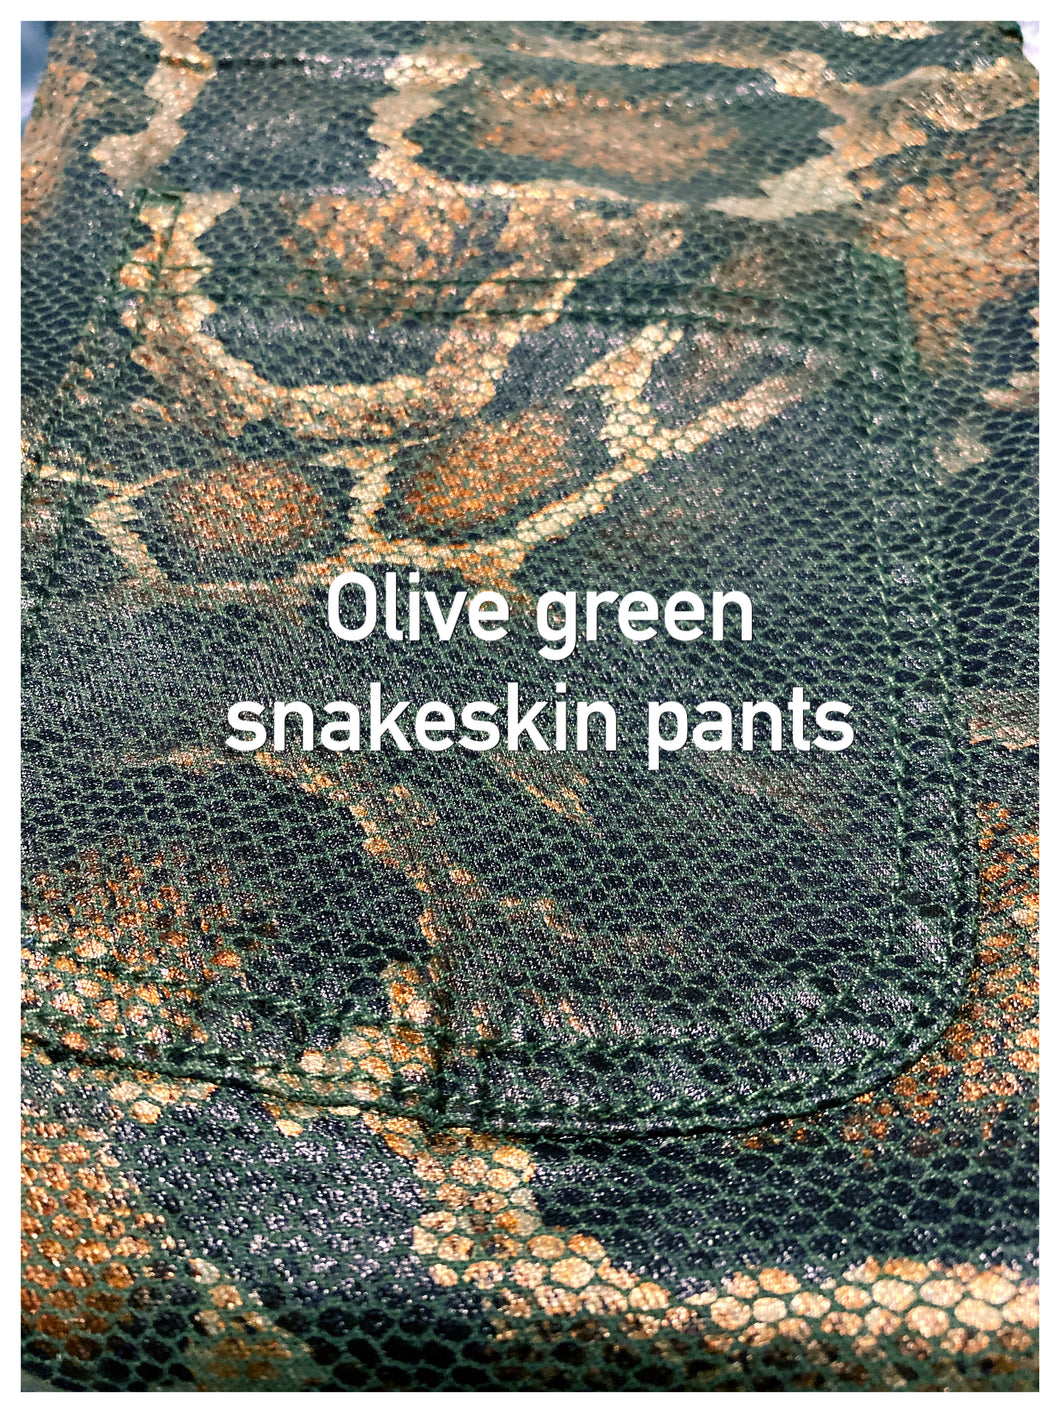 Black snakeskin pants